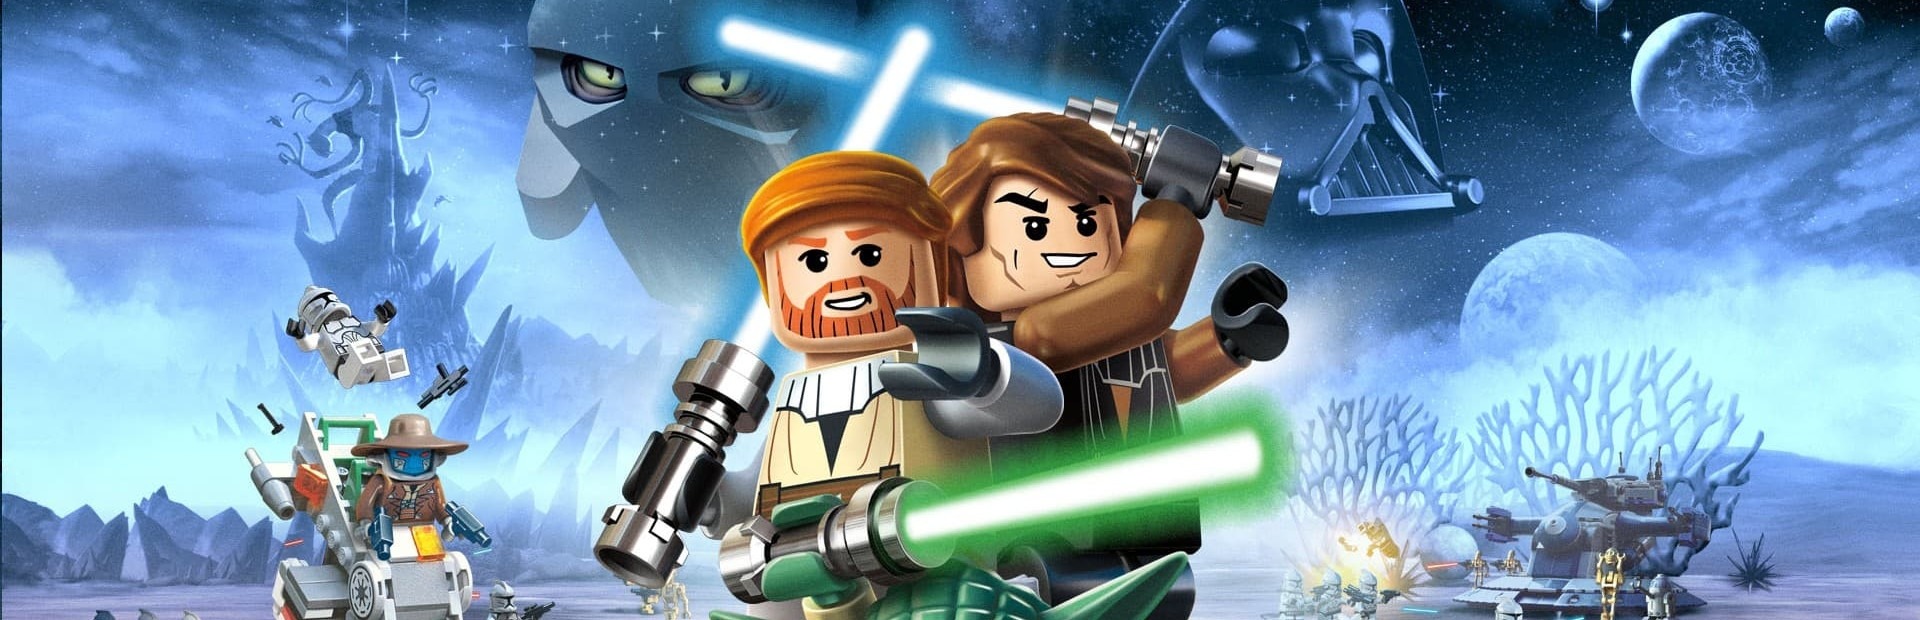 Banner Lego Star Wars III: The Clone Wars